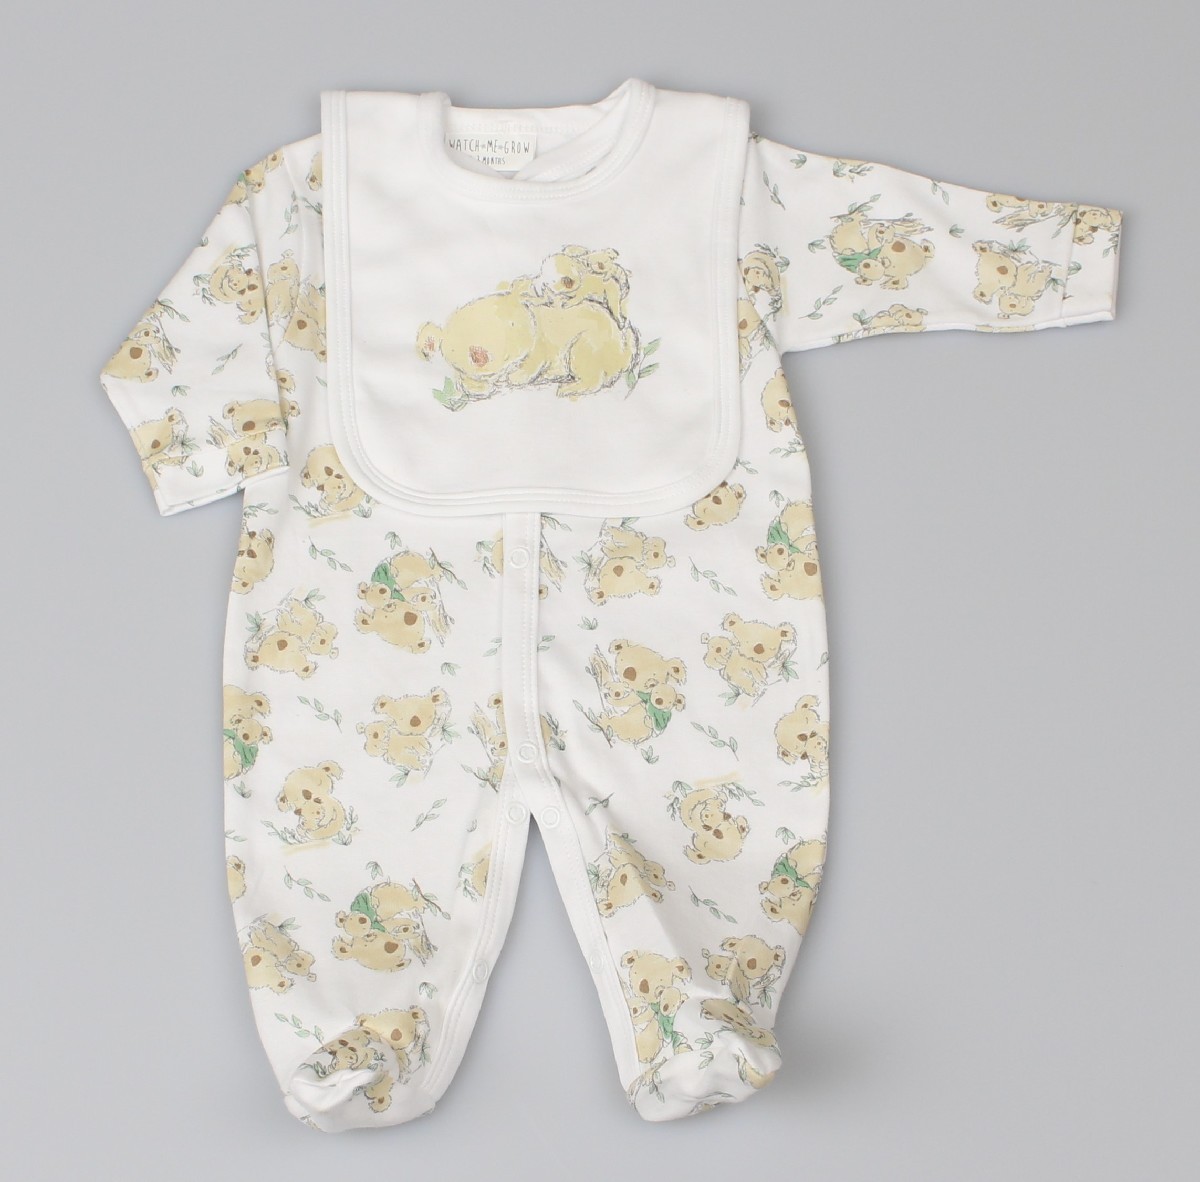 Baby 3pc Layette Gift Set - Sleepsuit, Bib And Cap